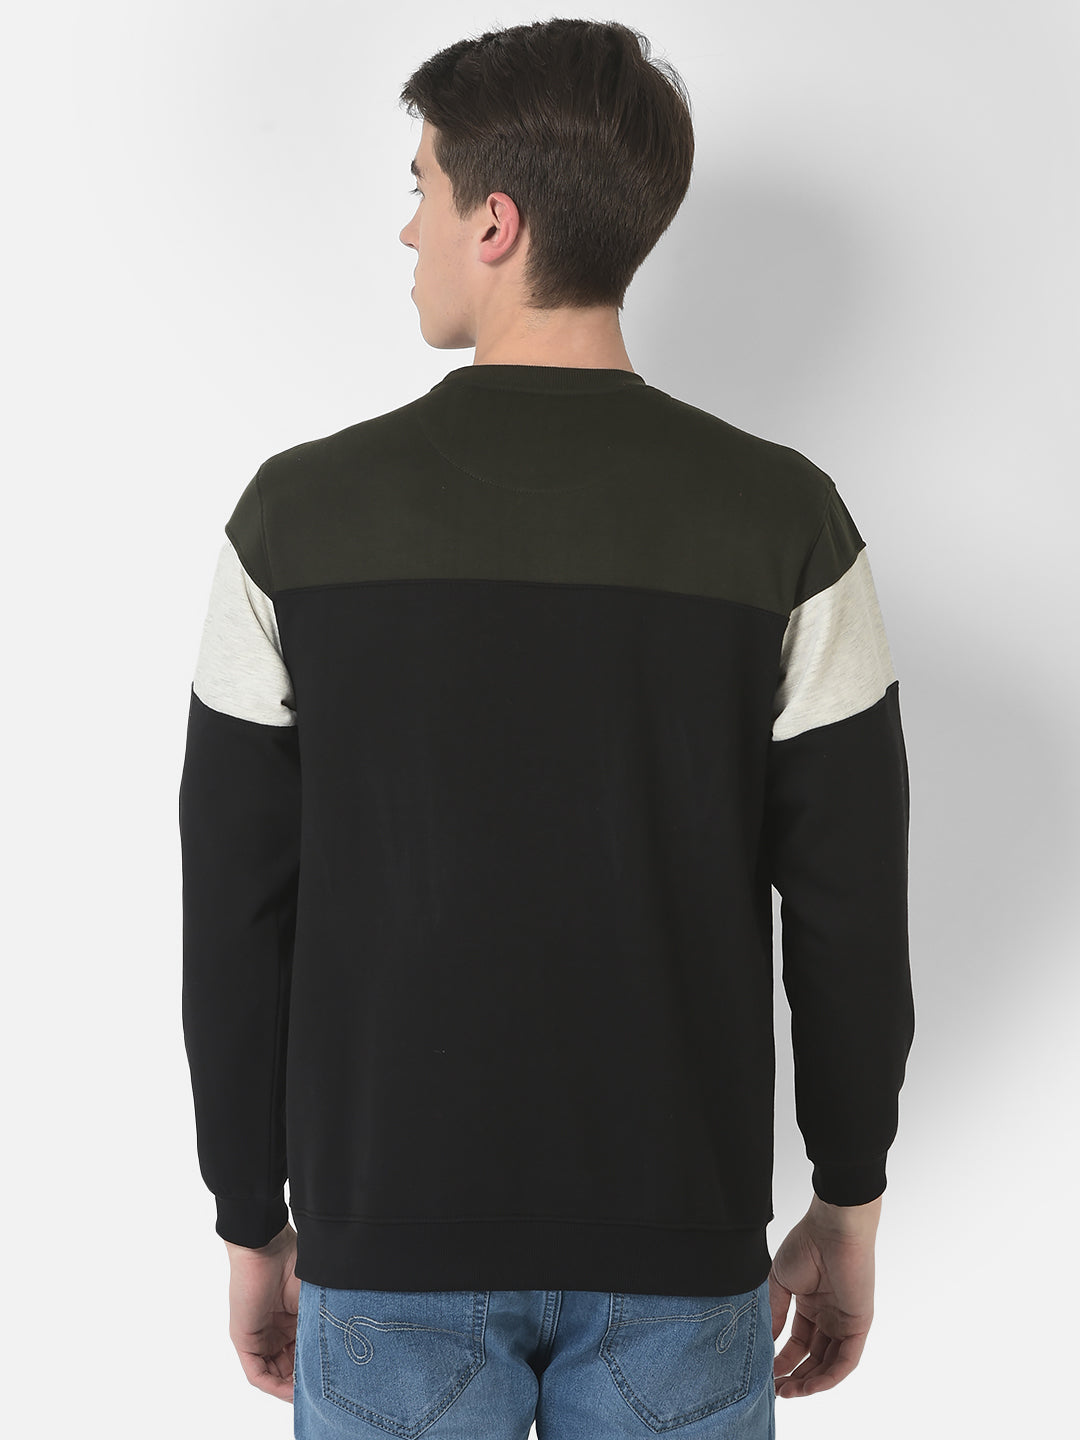 Cobb Black Printed Round Neck Sweatshirt